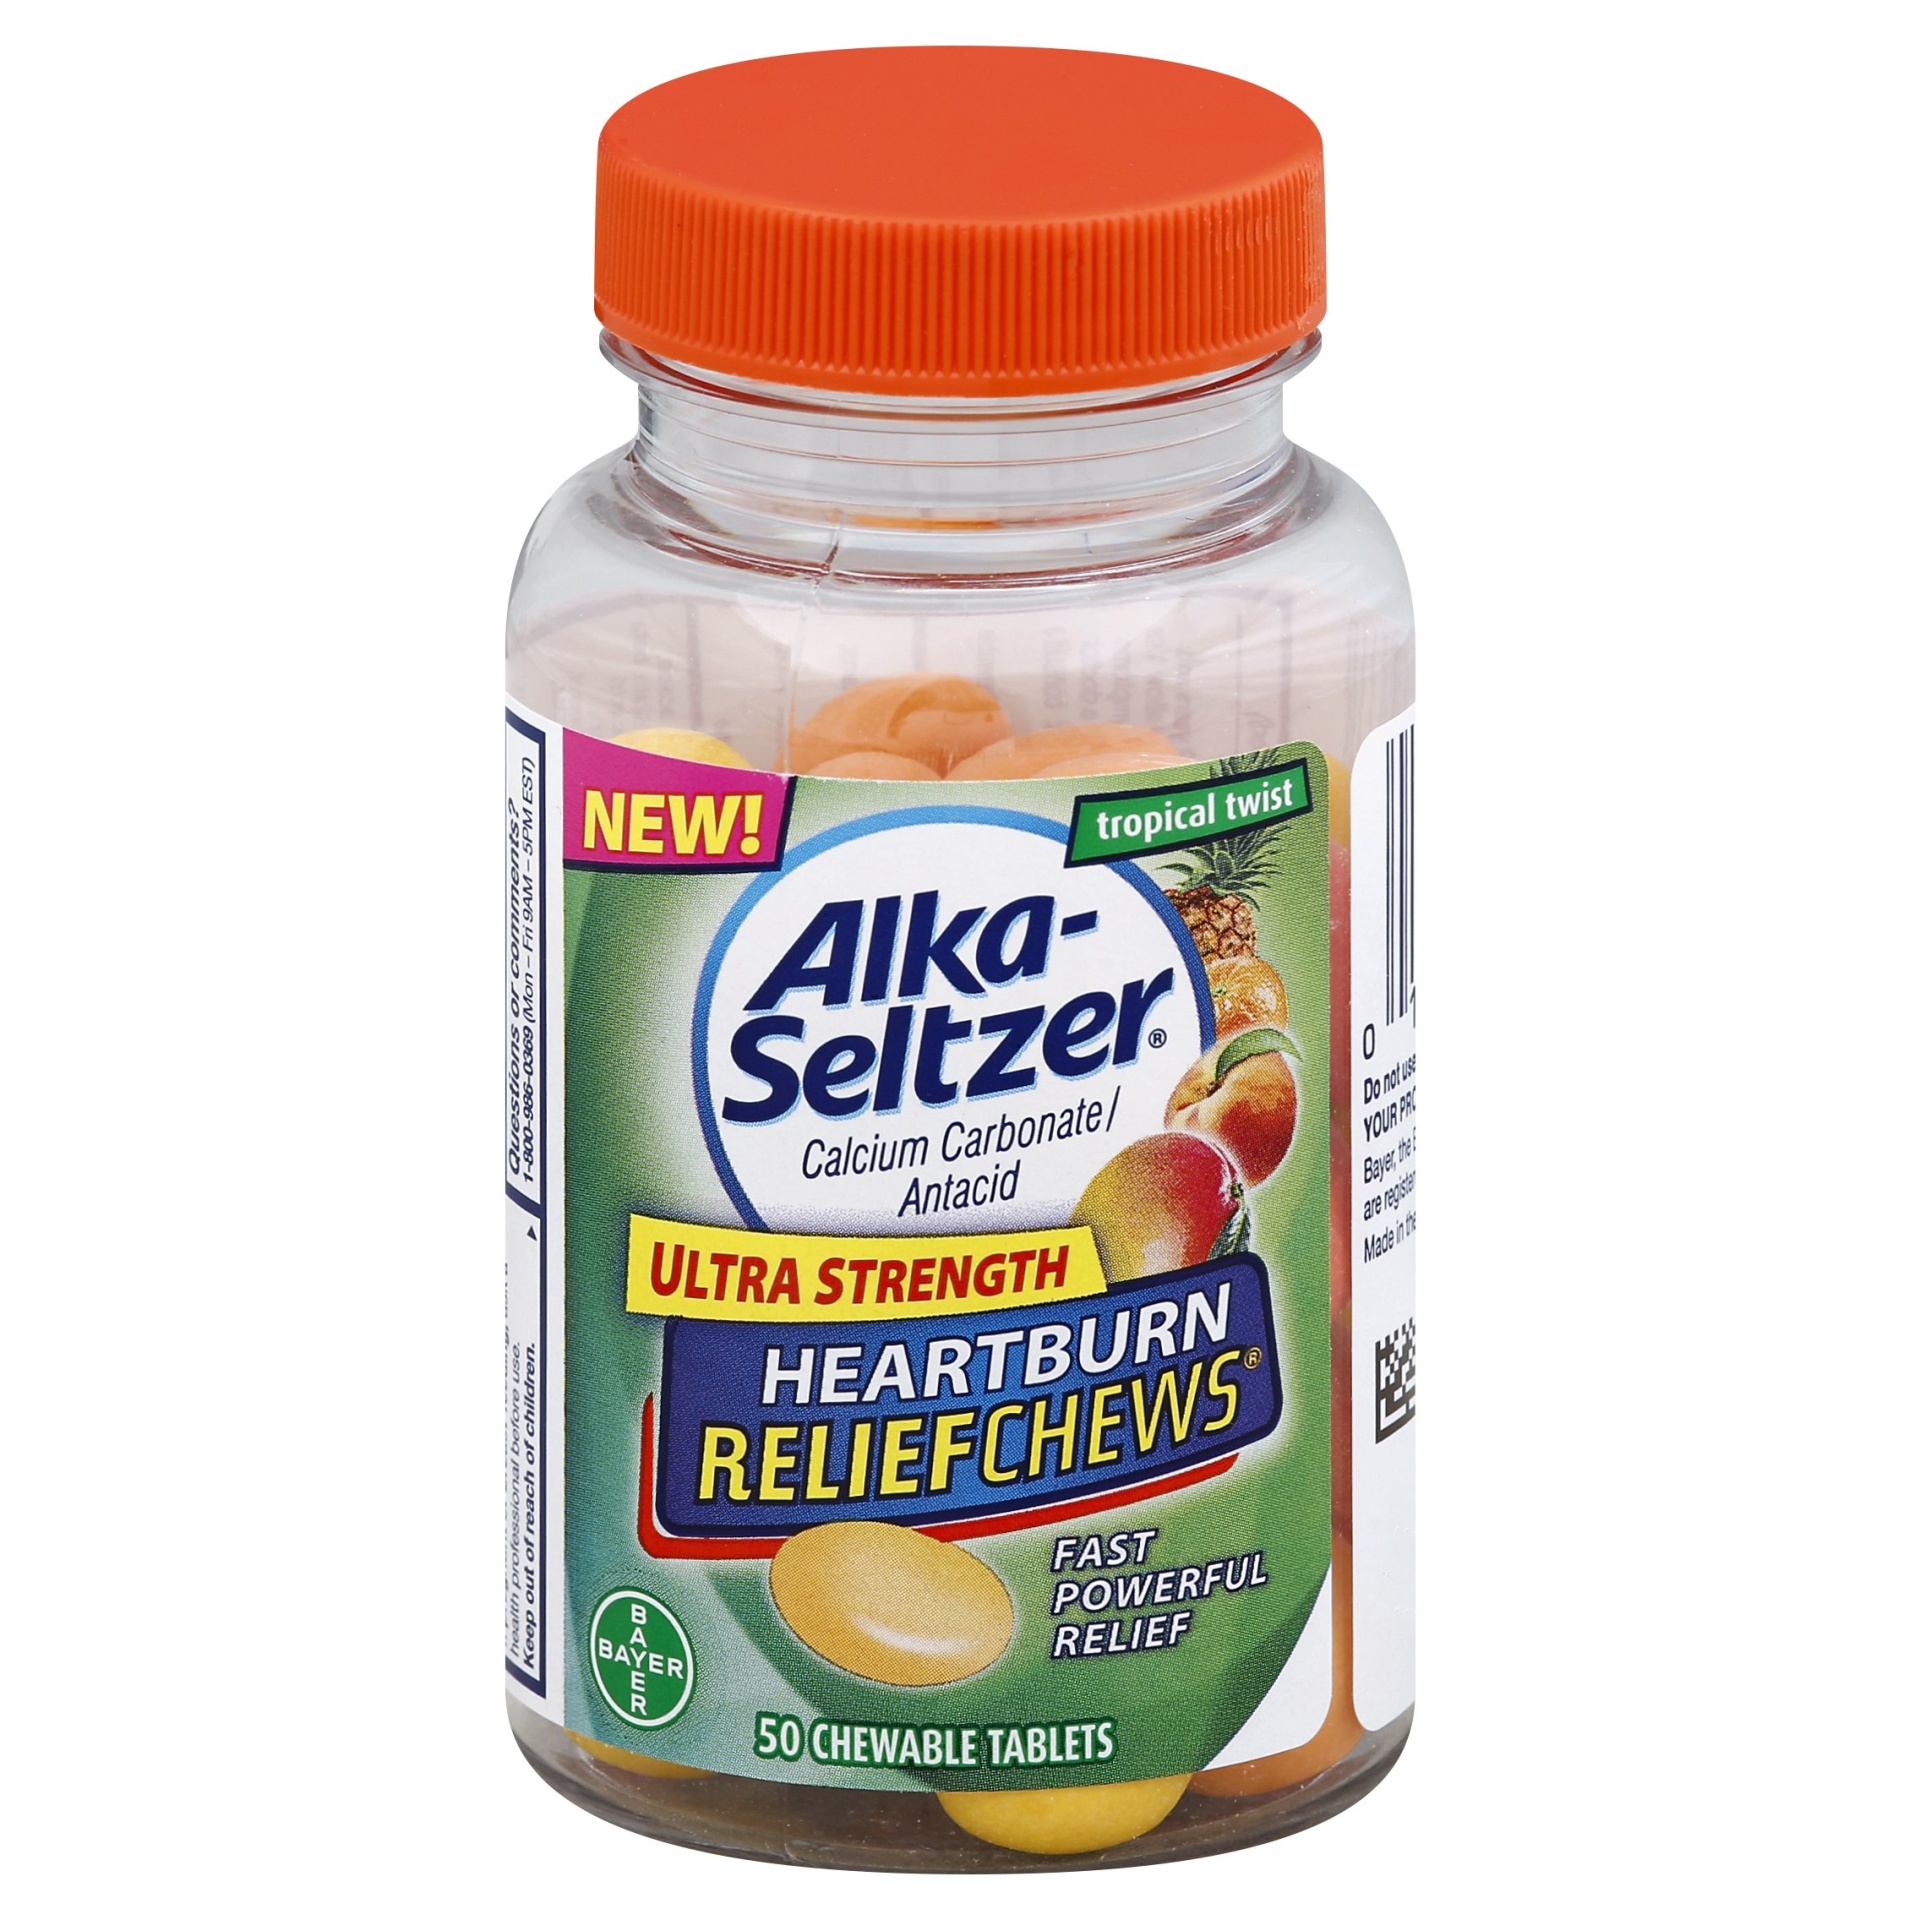 slide 1 of 3, Alka-Seltzer Ultra Strength Heartburn ReliefChews - Tropical Twist, 50 ct